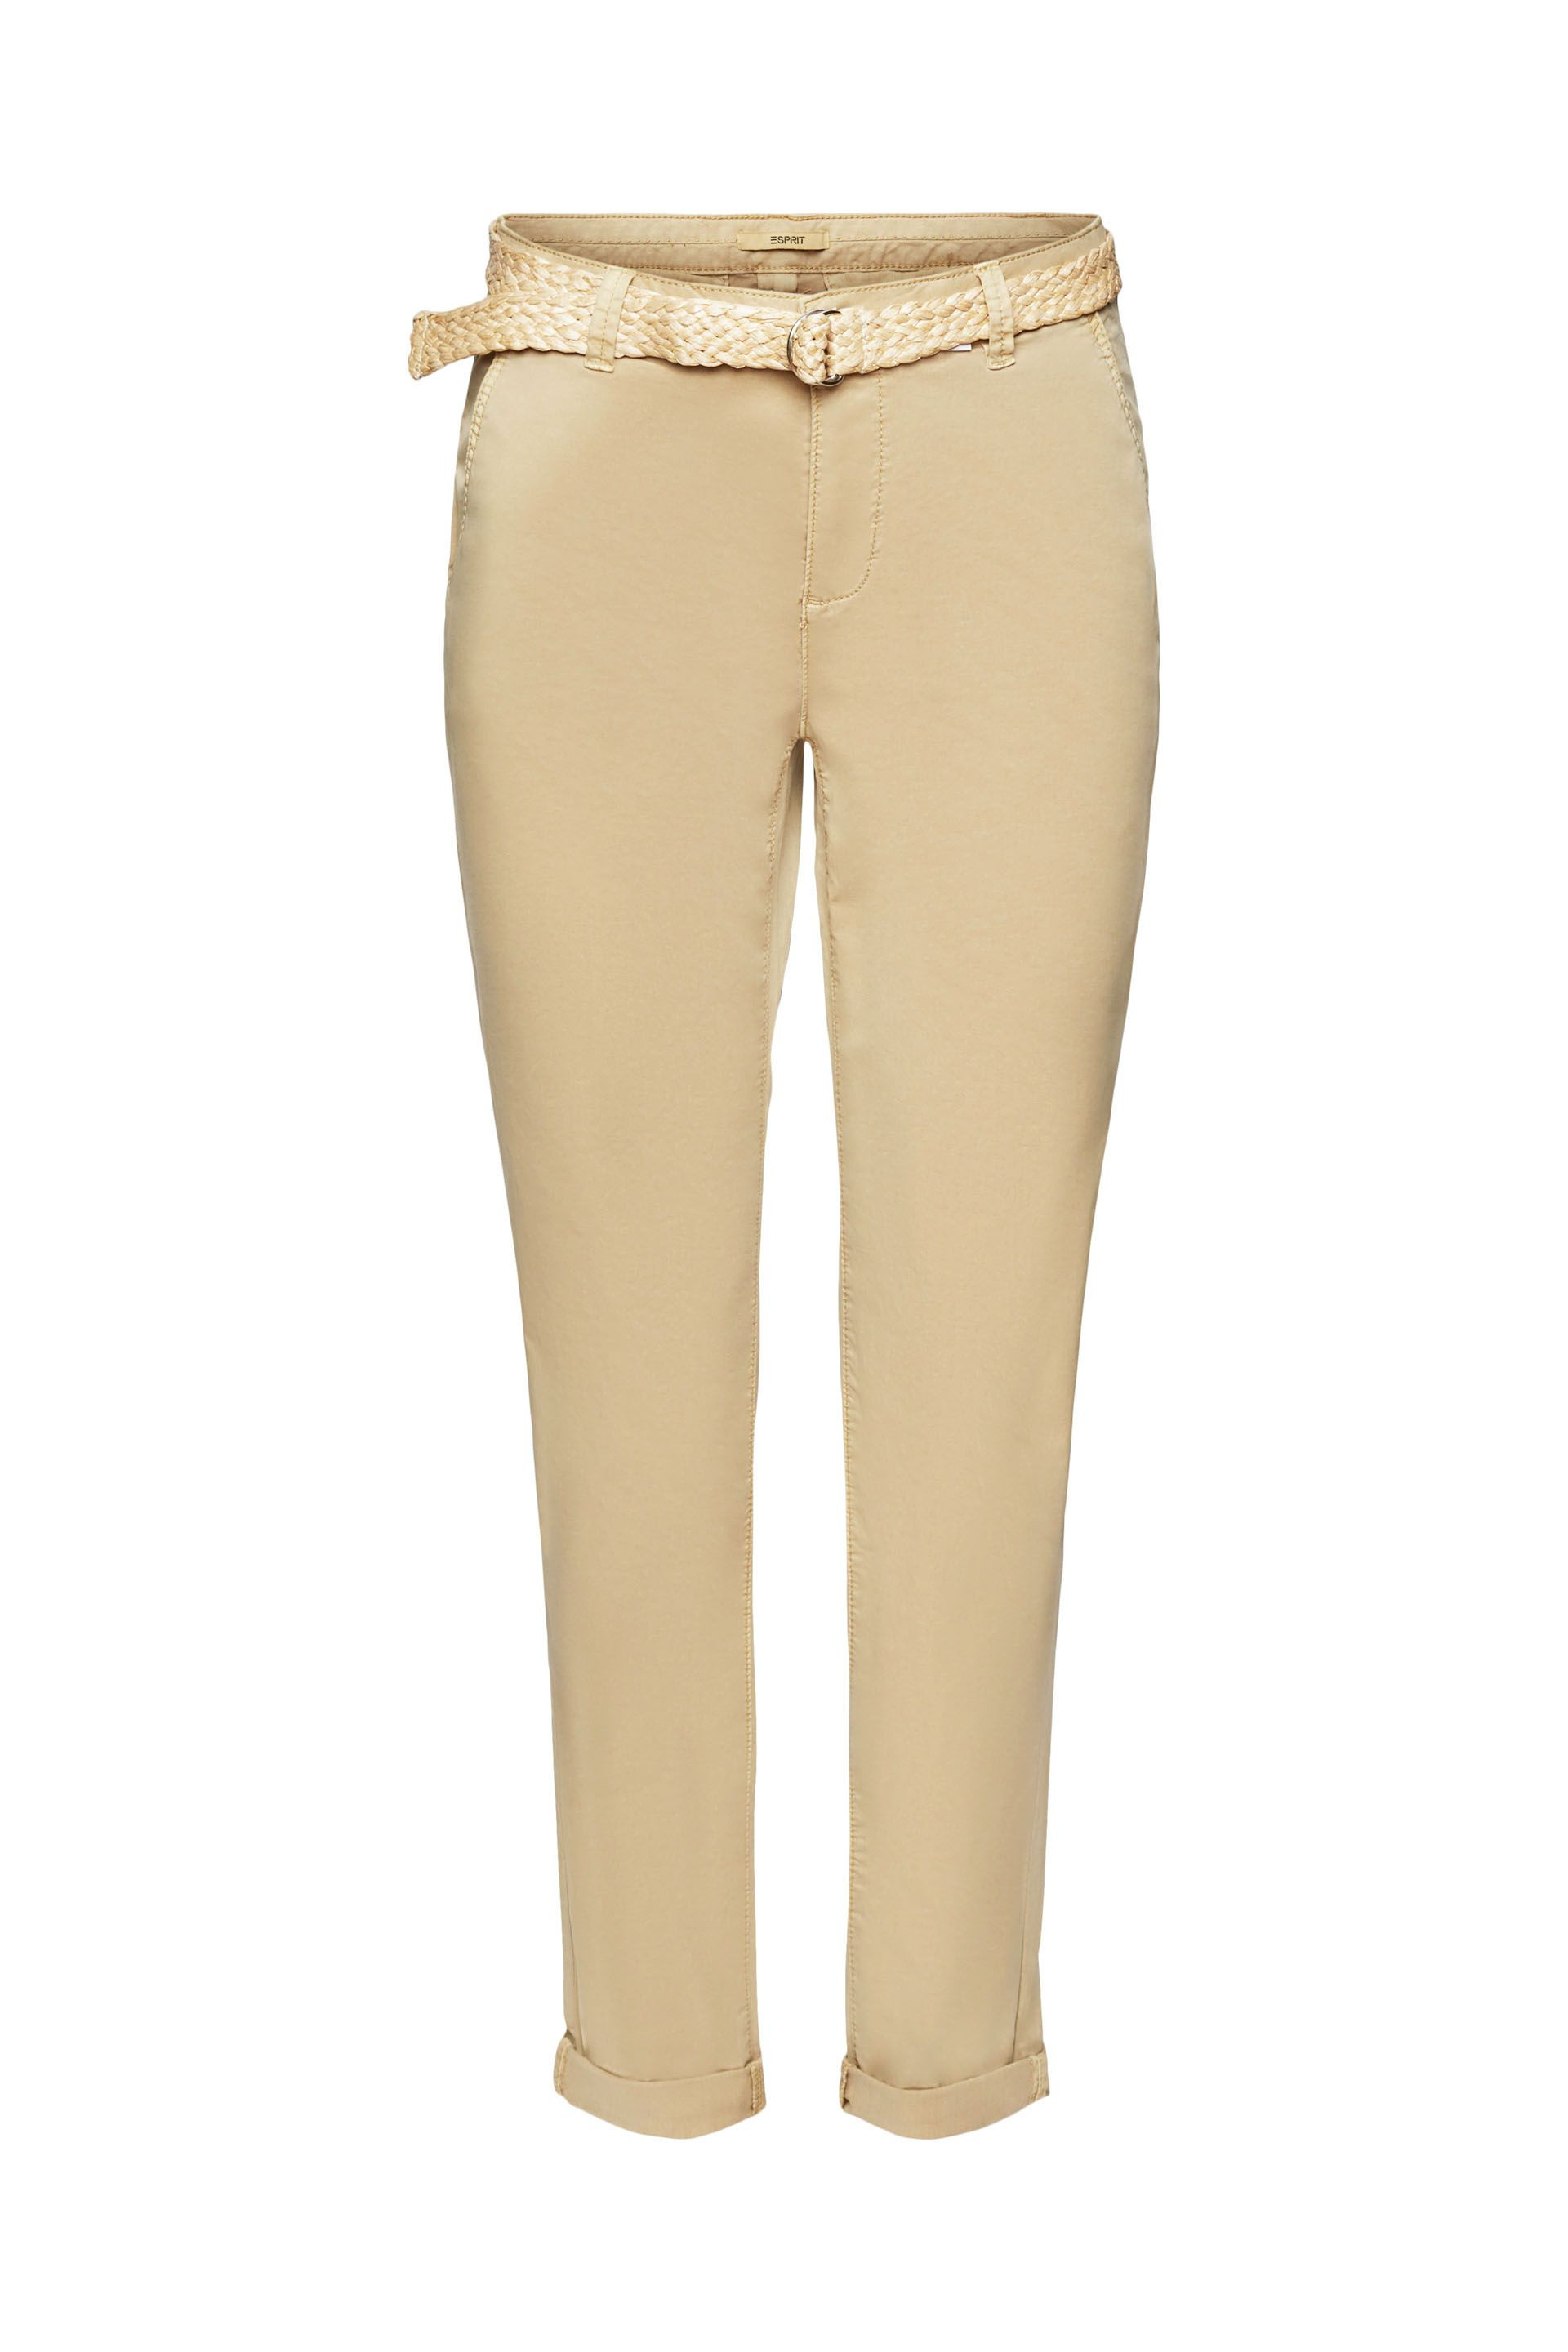 Esprit - Pantaloni chino cropped con cintura, Sabbia, large image number 0